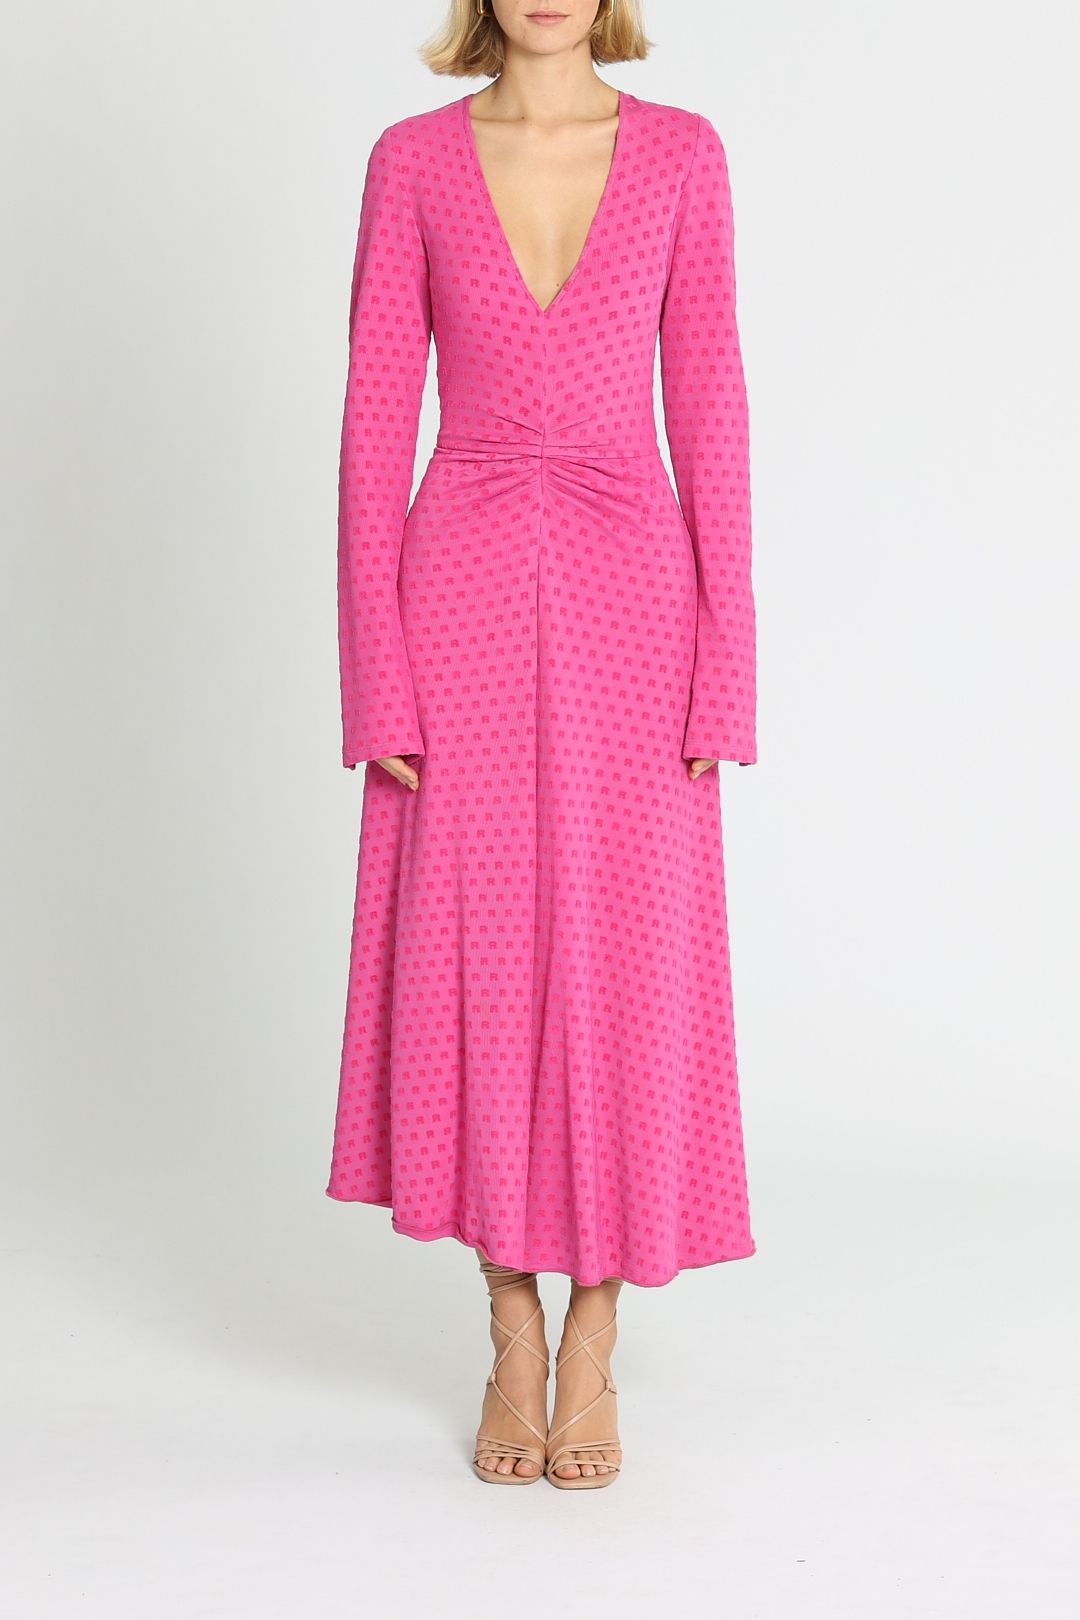 Rotate By Birger Christensen Kamla Rose Violet Dress